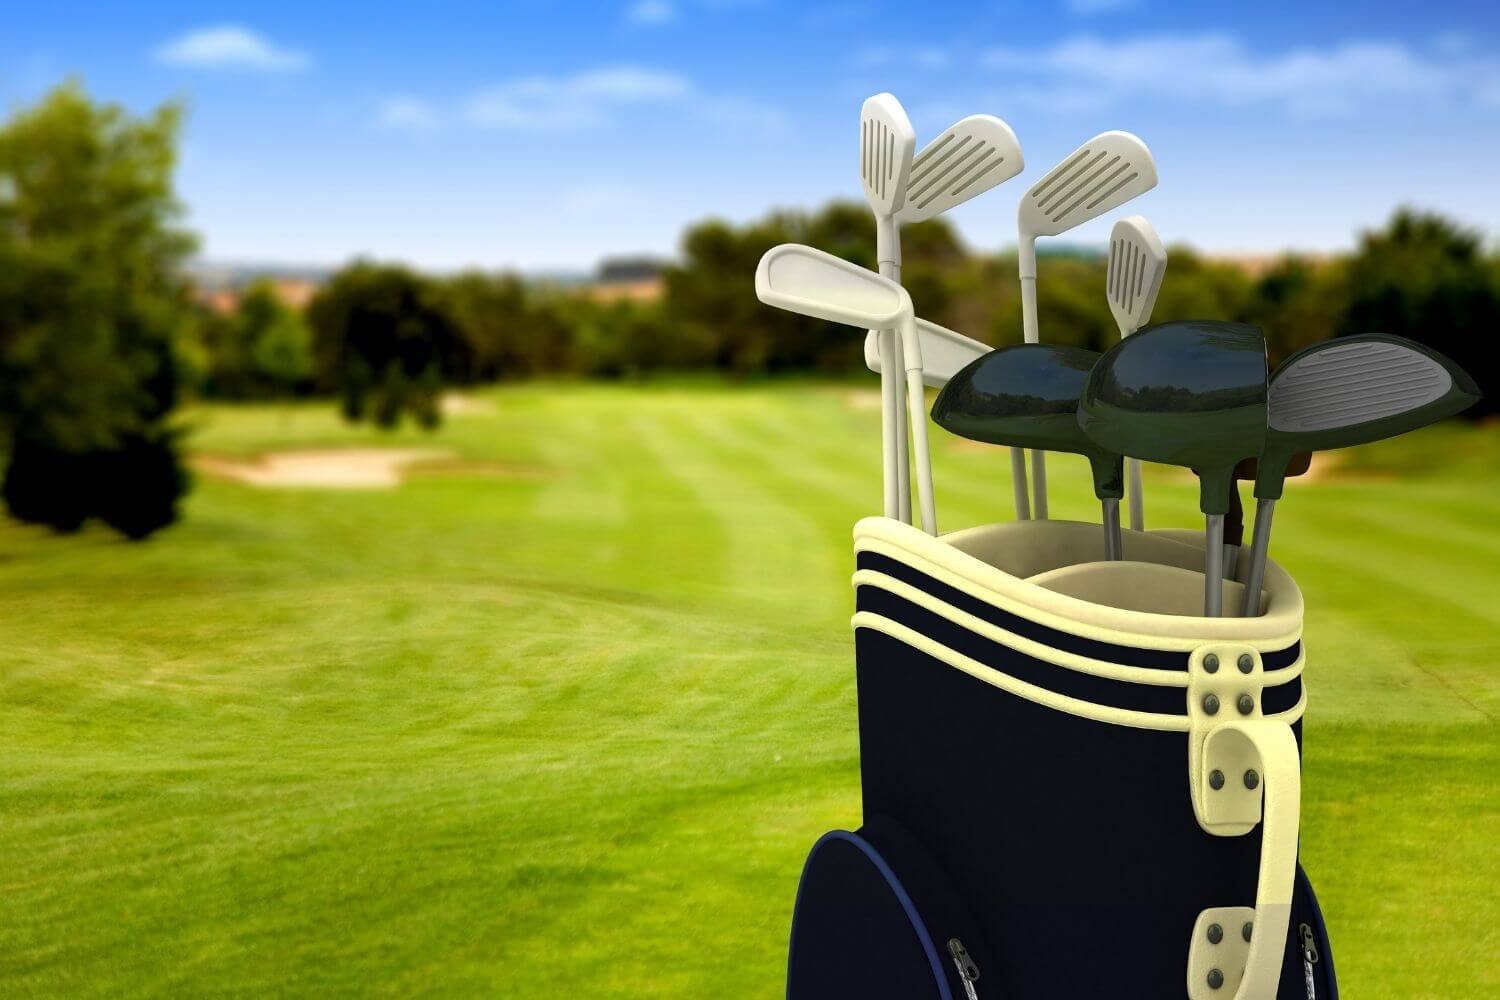 Golf club bag on a par 3 golf course